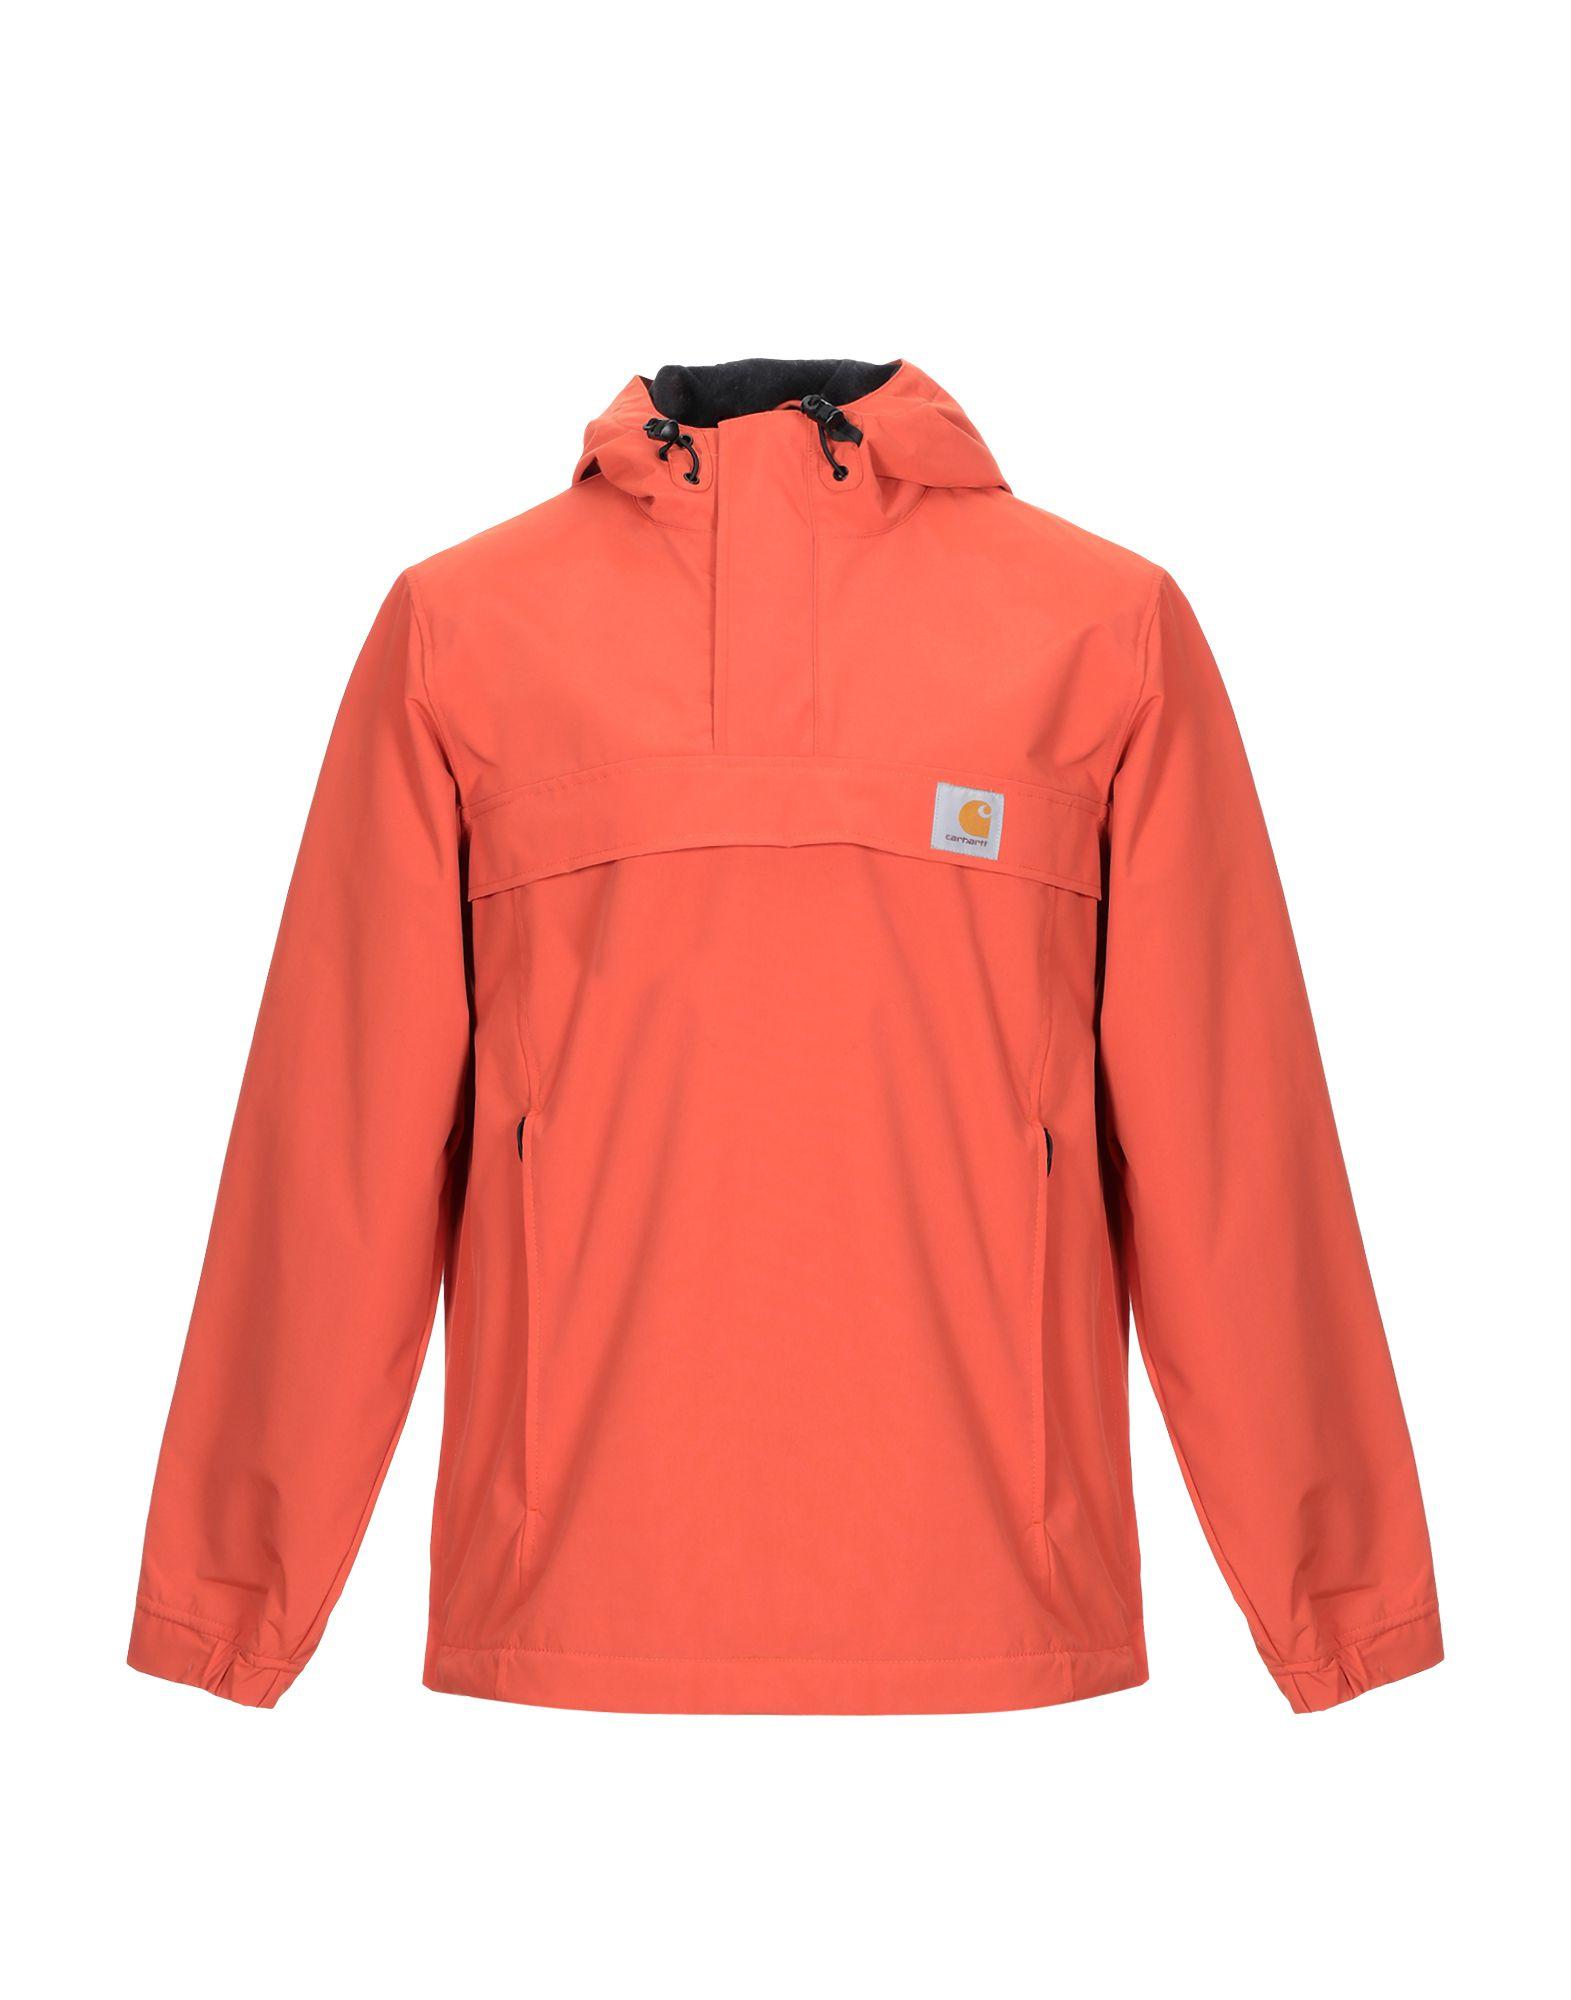 Carhartt Jacket in Orange for Men - Lyst